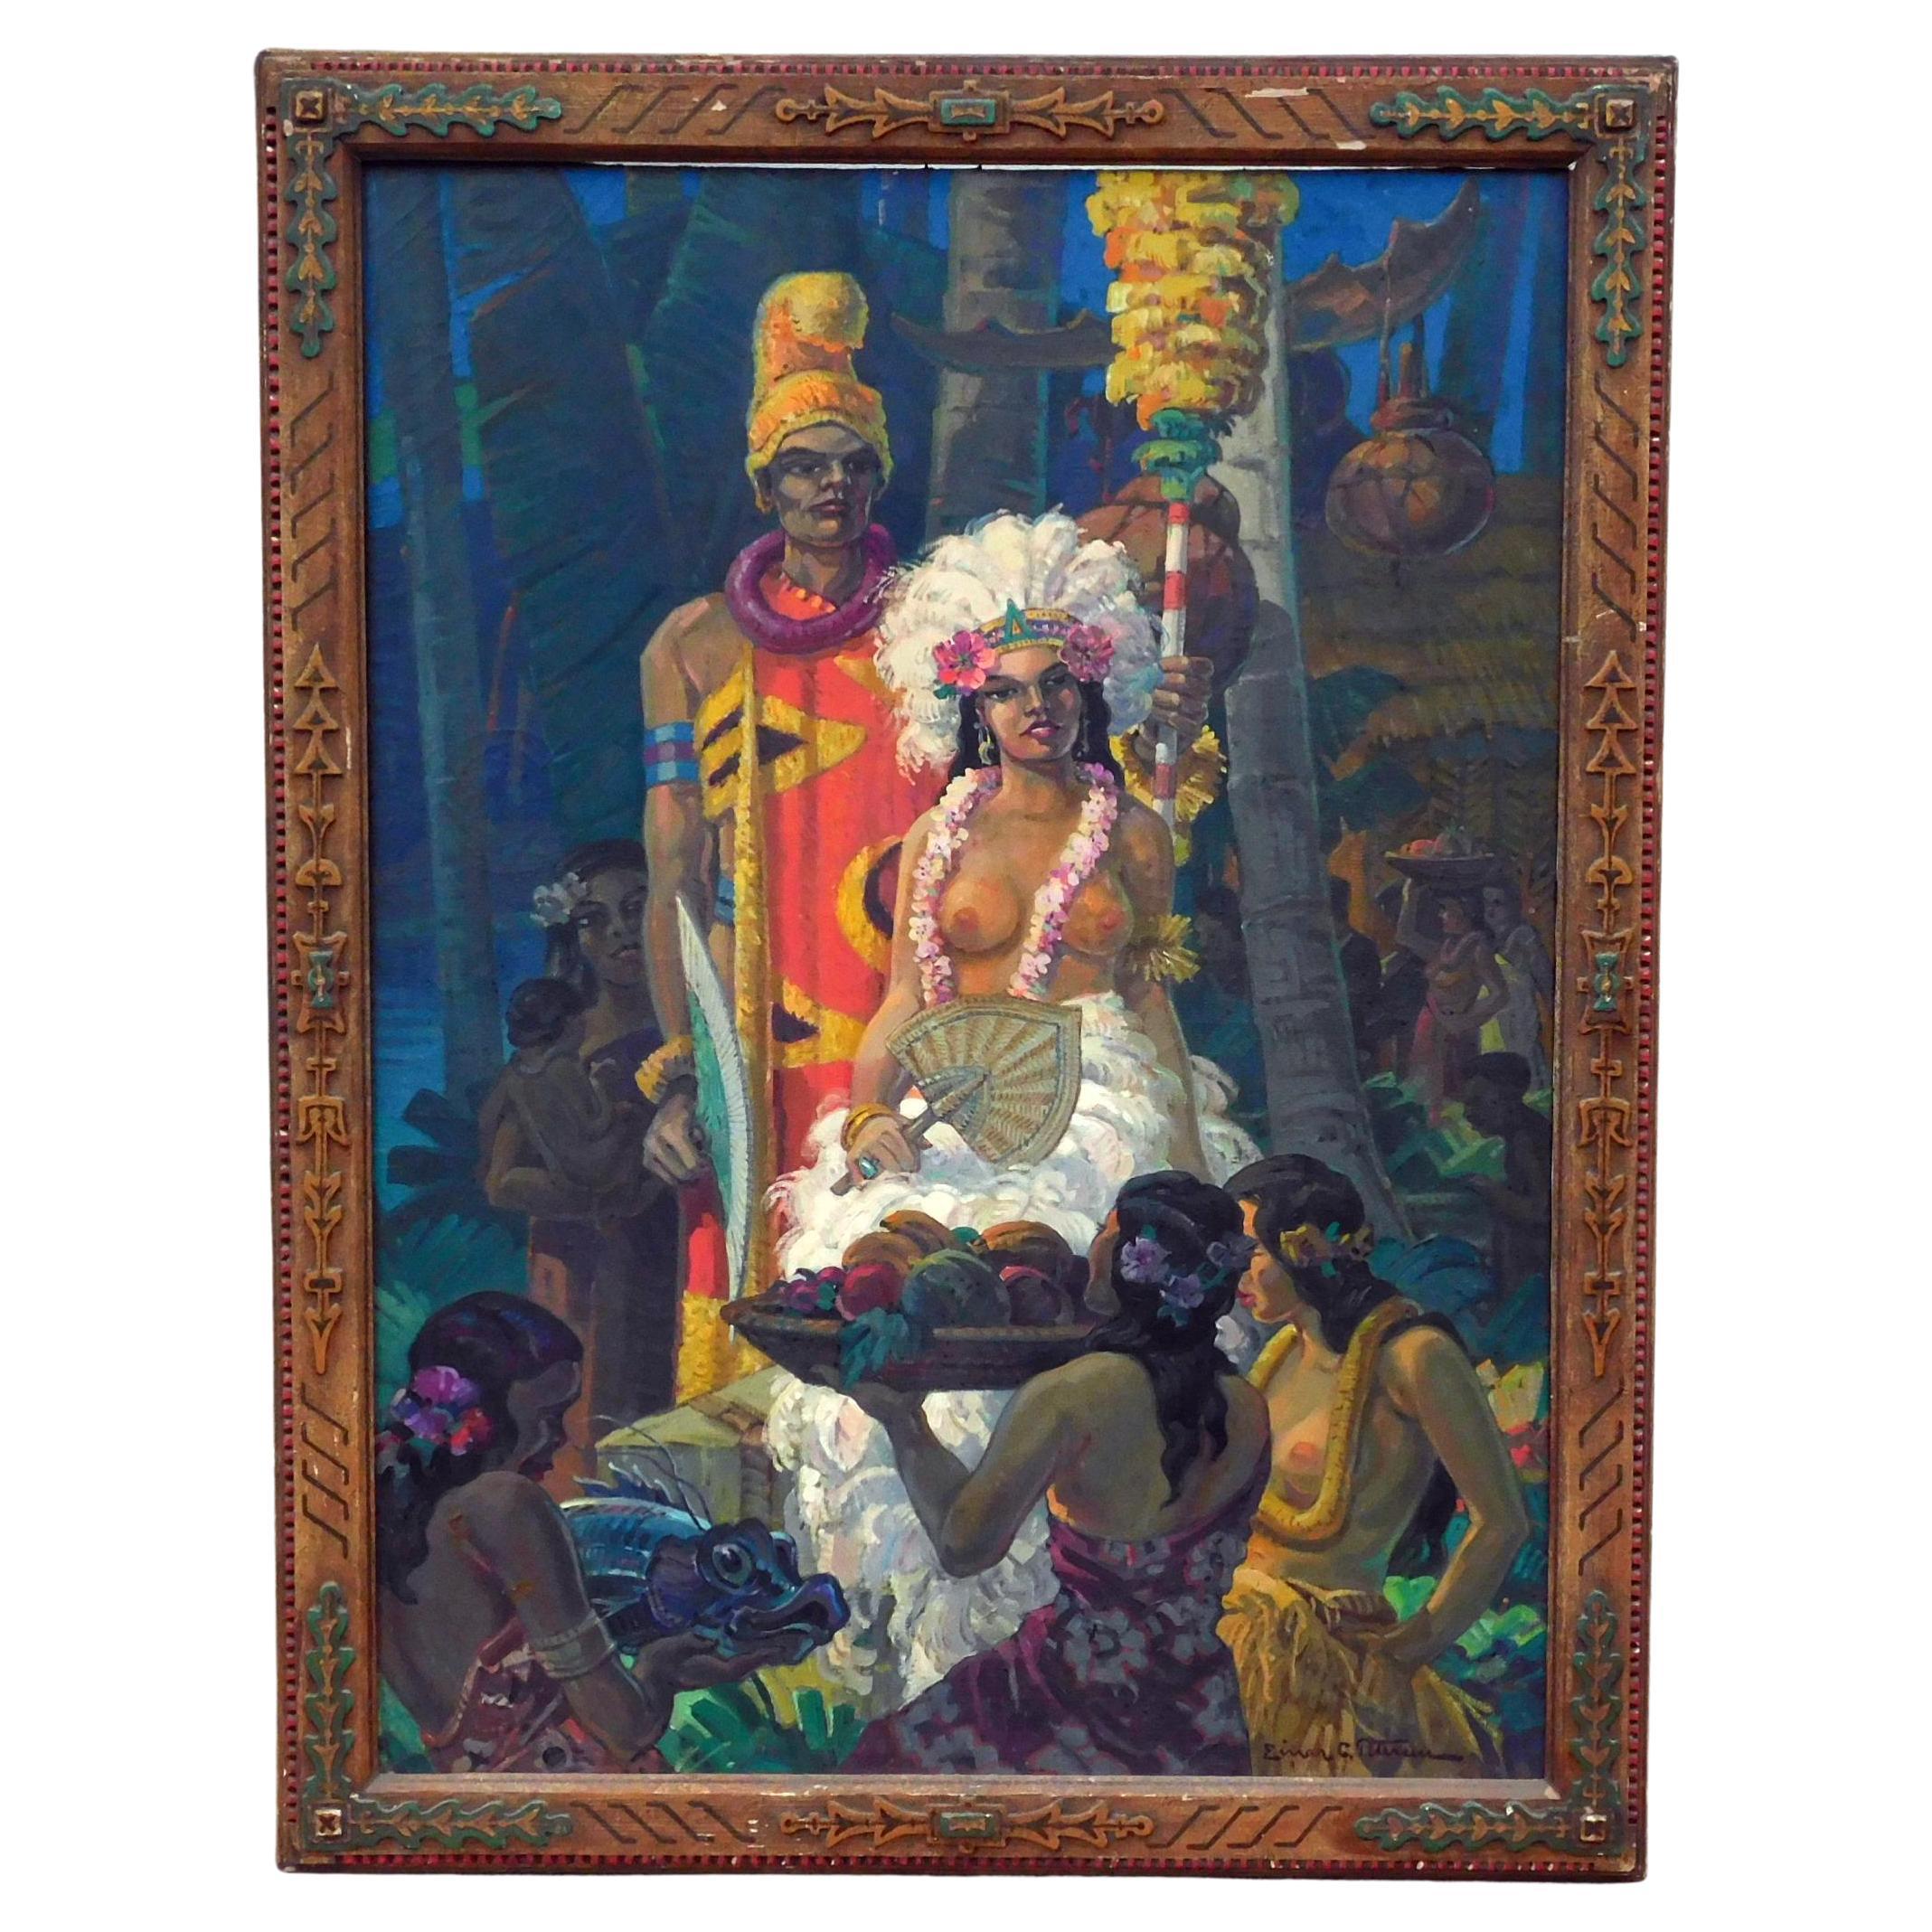 Einar Petersen Hawaiian Subject Oil on Canvas, 1939 - Homage to the Queen